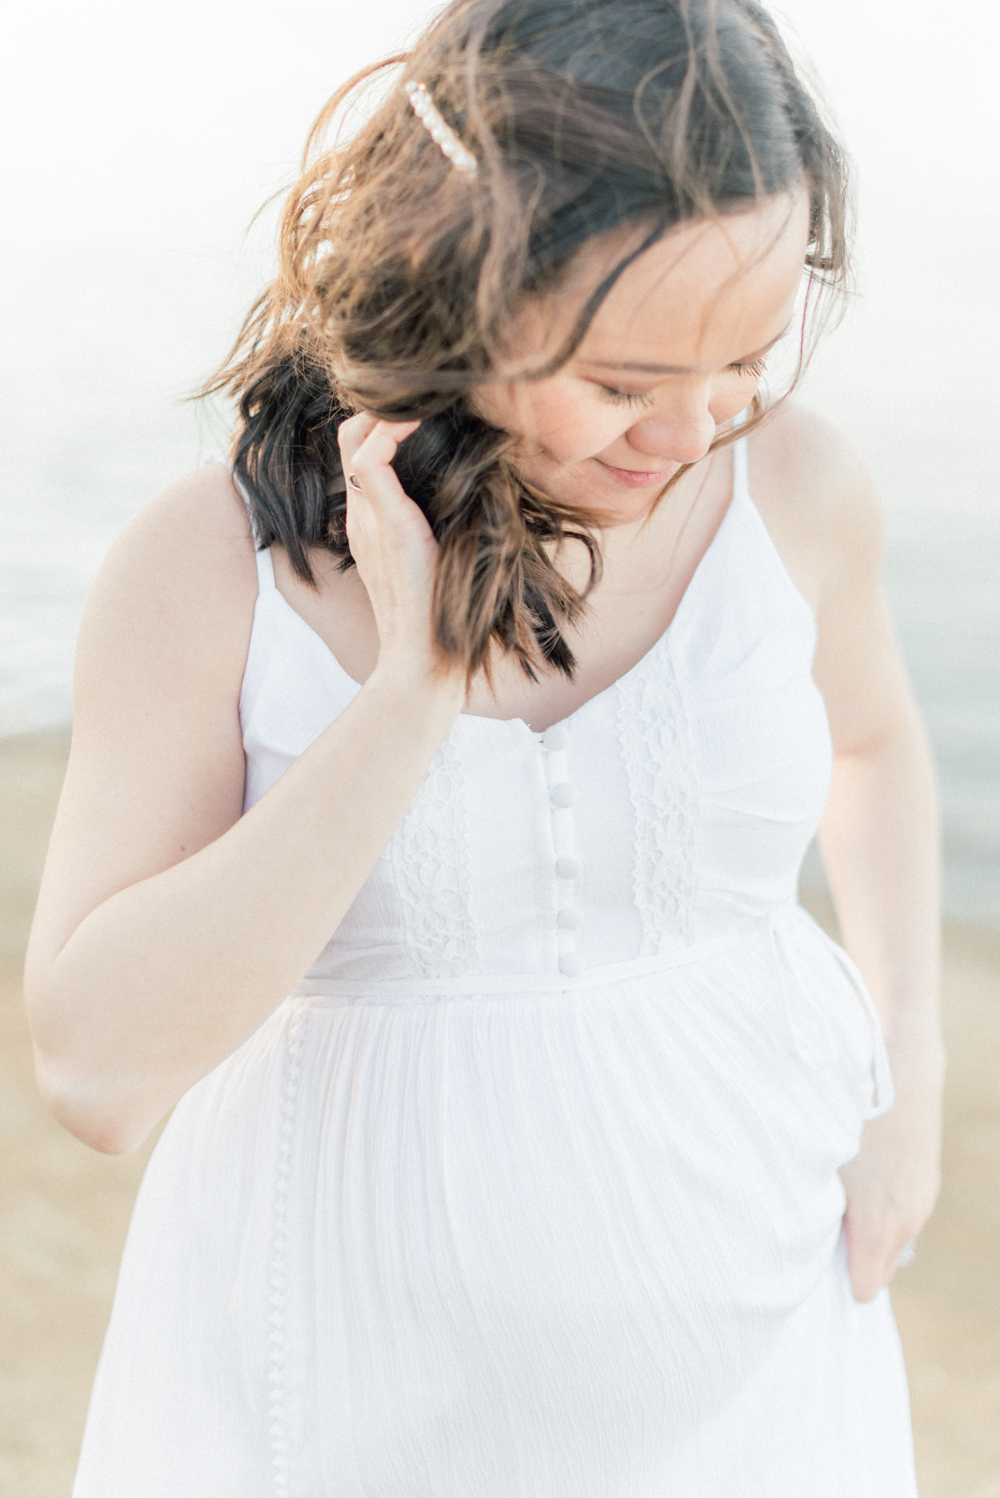 Maternity-Photographer-Washington-DC-Rebecca-Sable